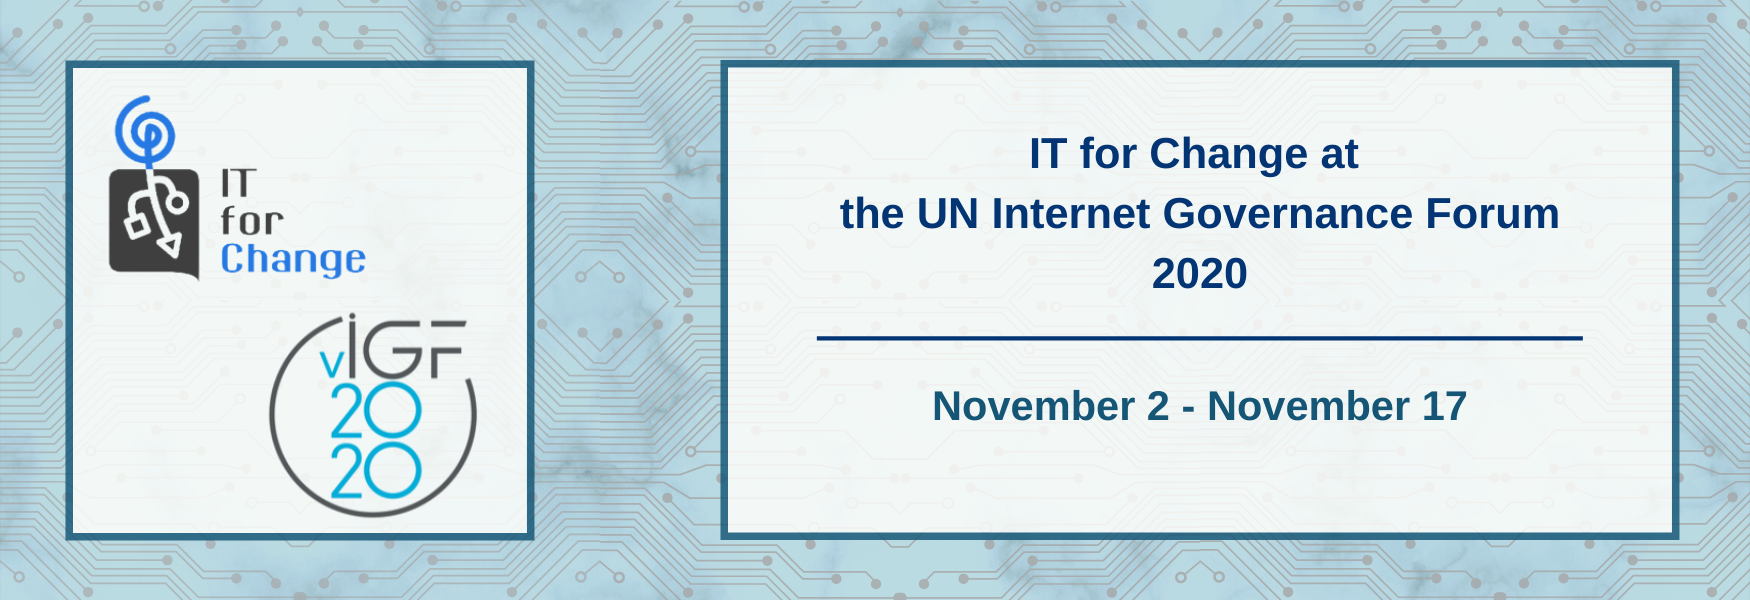 UN Internet Governance Forum 2020